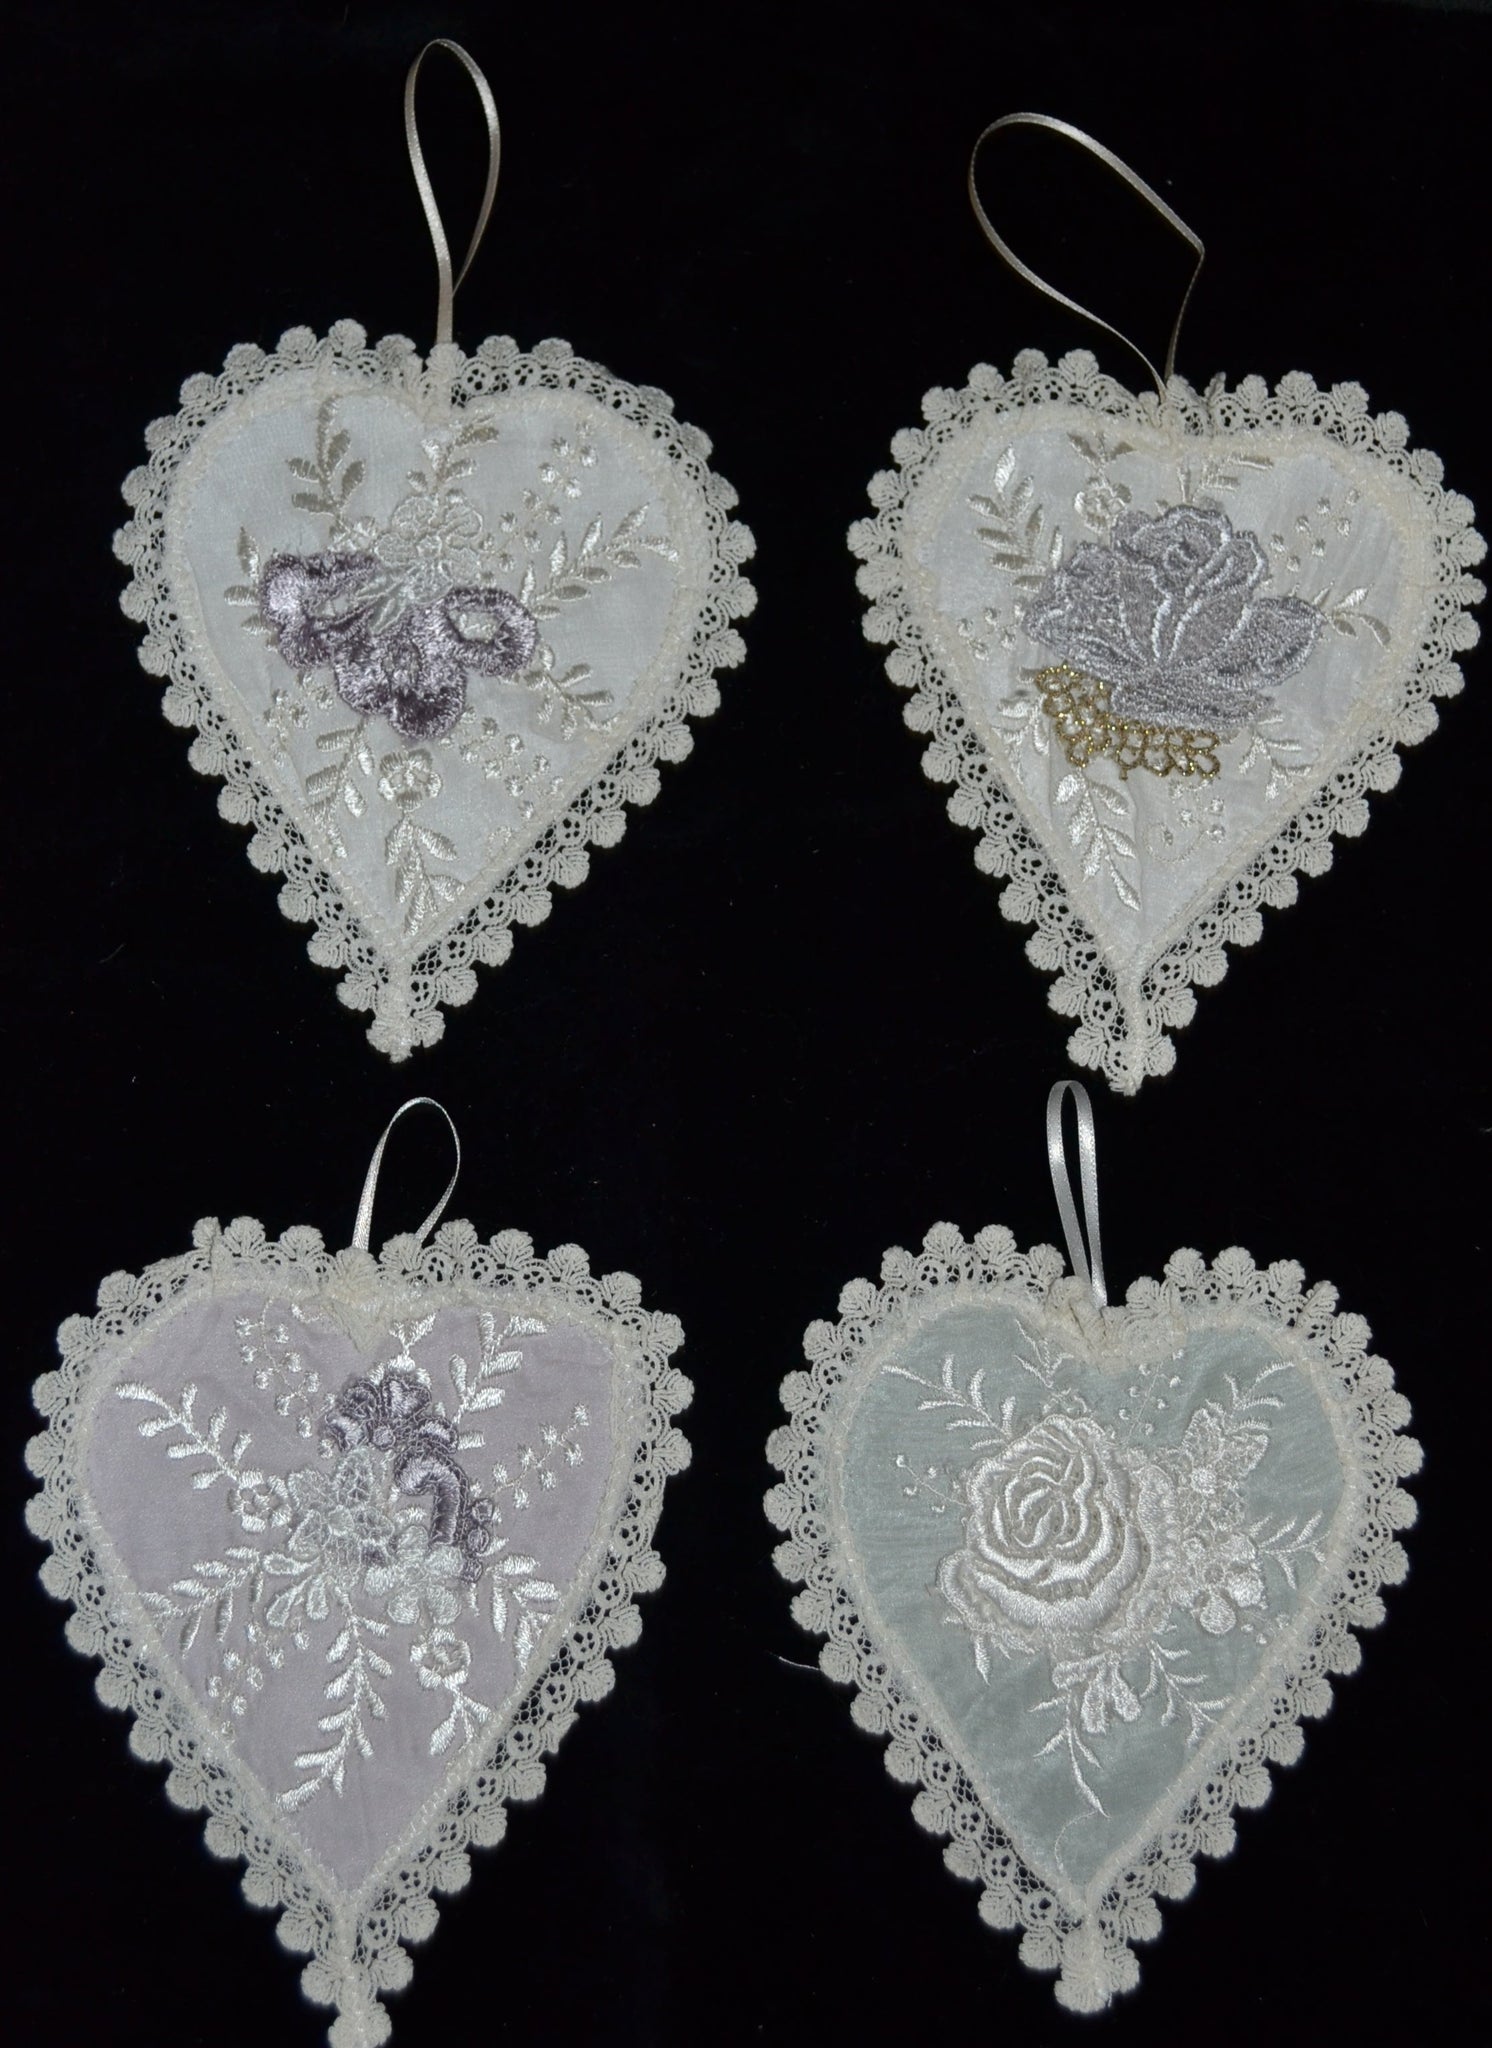 Heart Shaped Lavender Sachets, Set of 4 - DH5